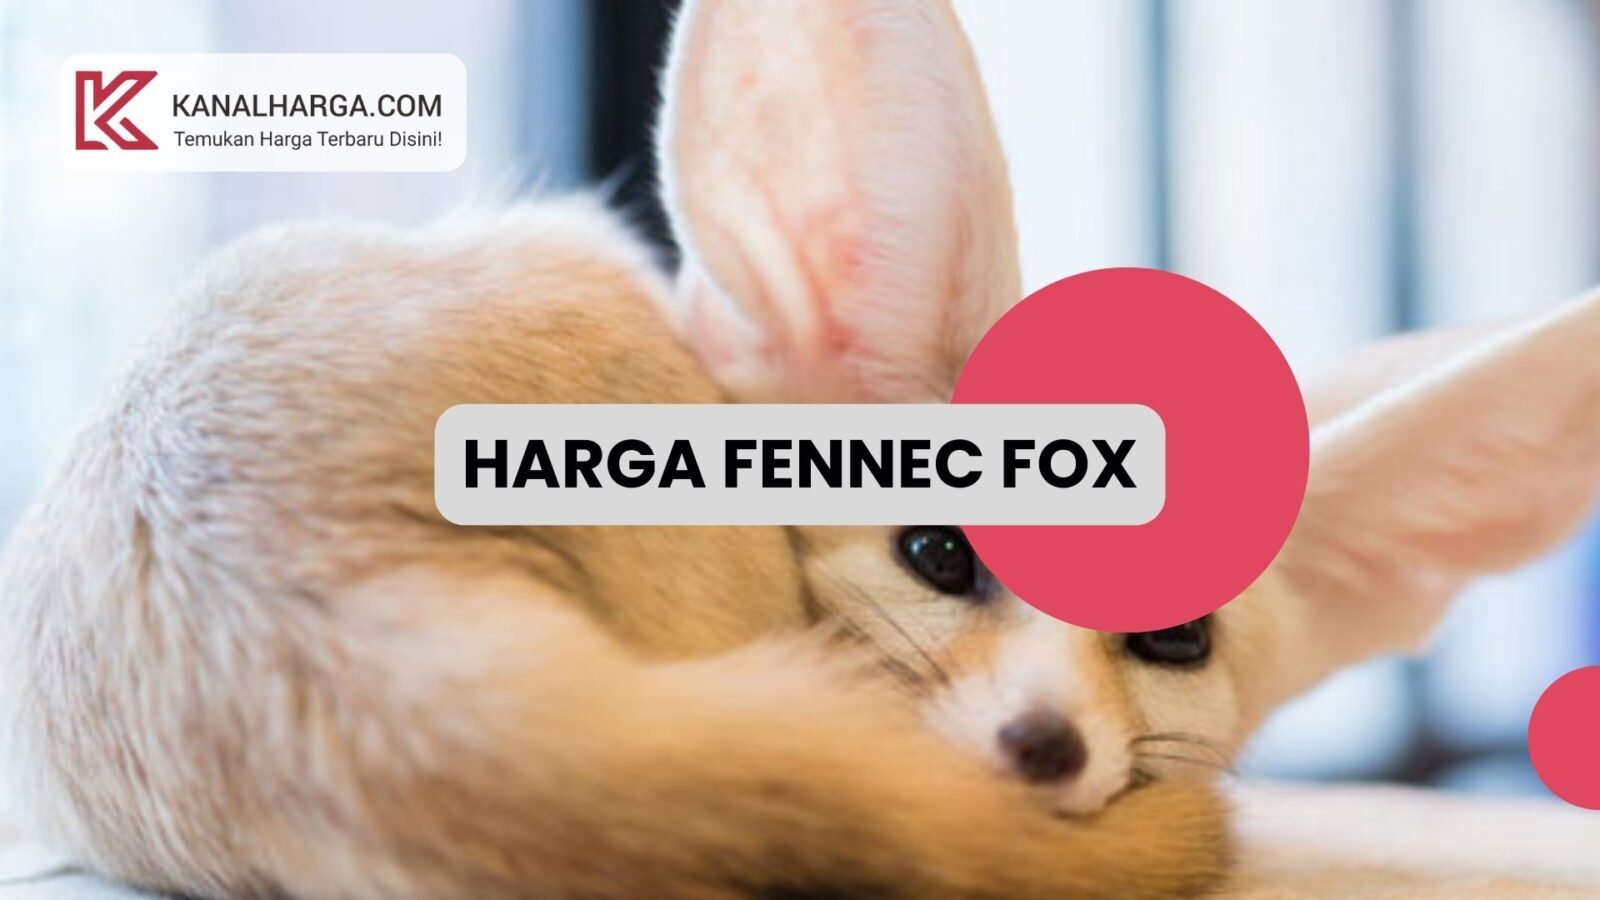 Harga Fennec Harga Fennec Fox